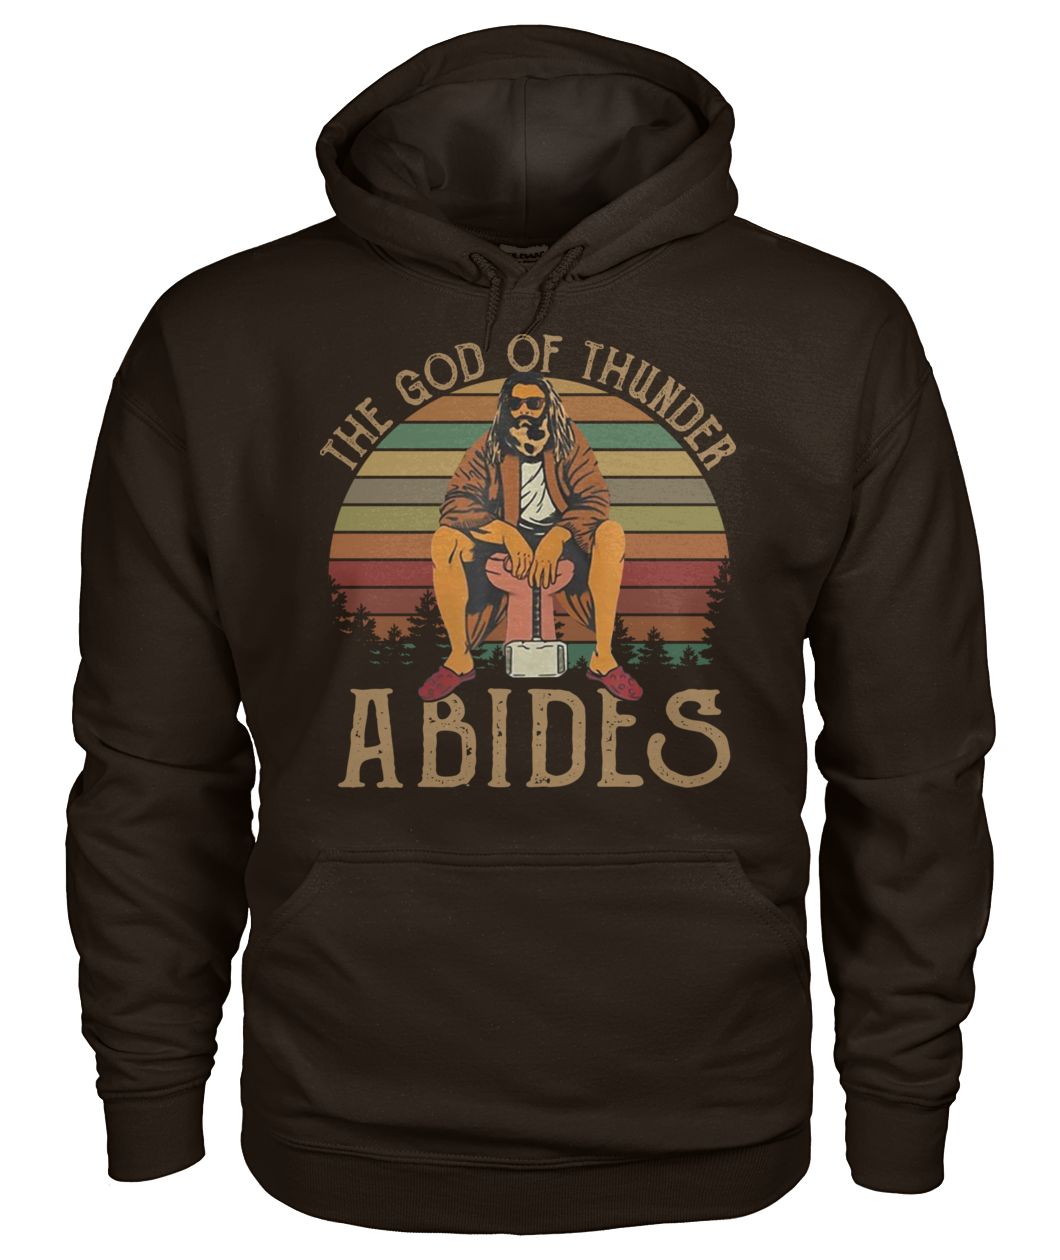 Vintage snoop dog the god of thunder abides gildan hoodie